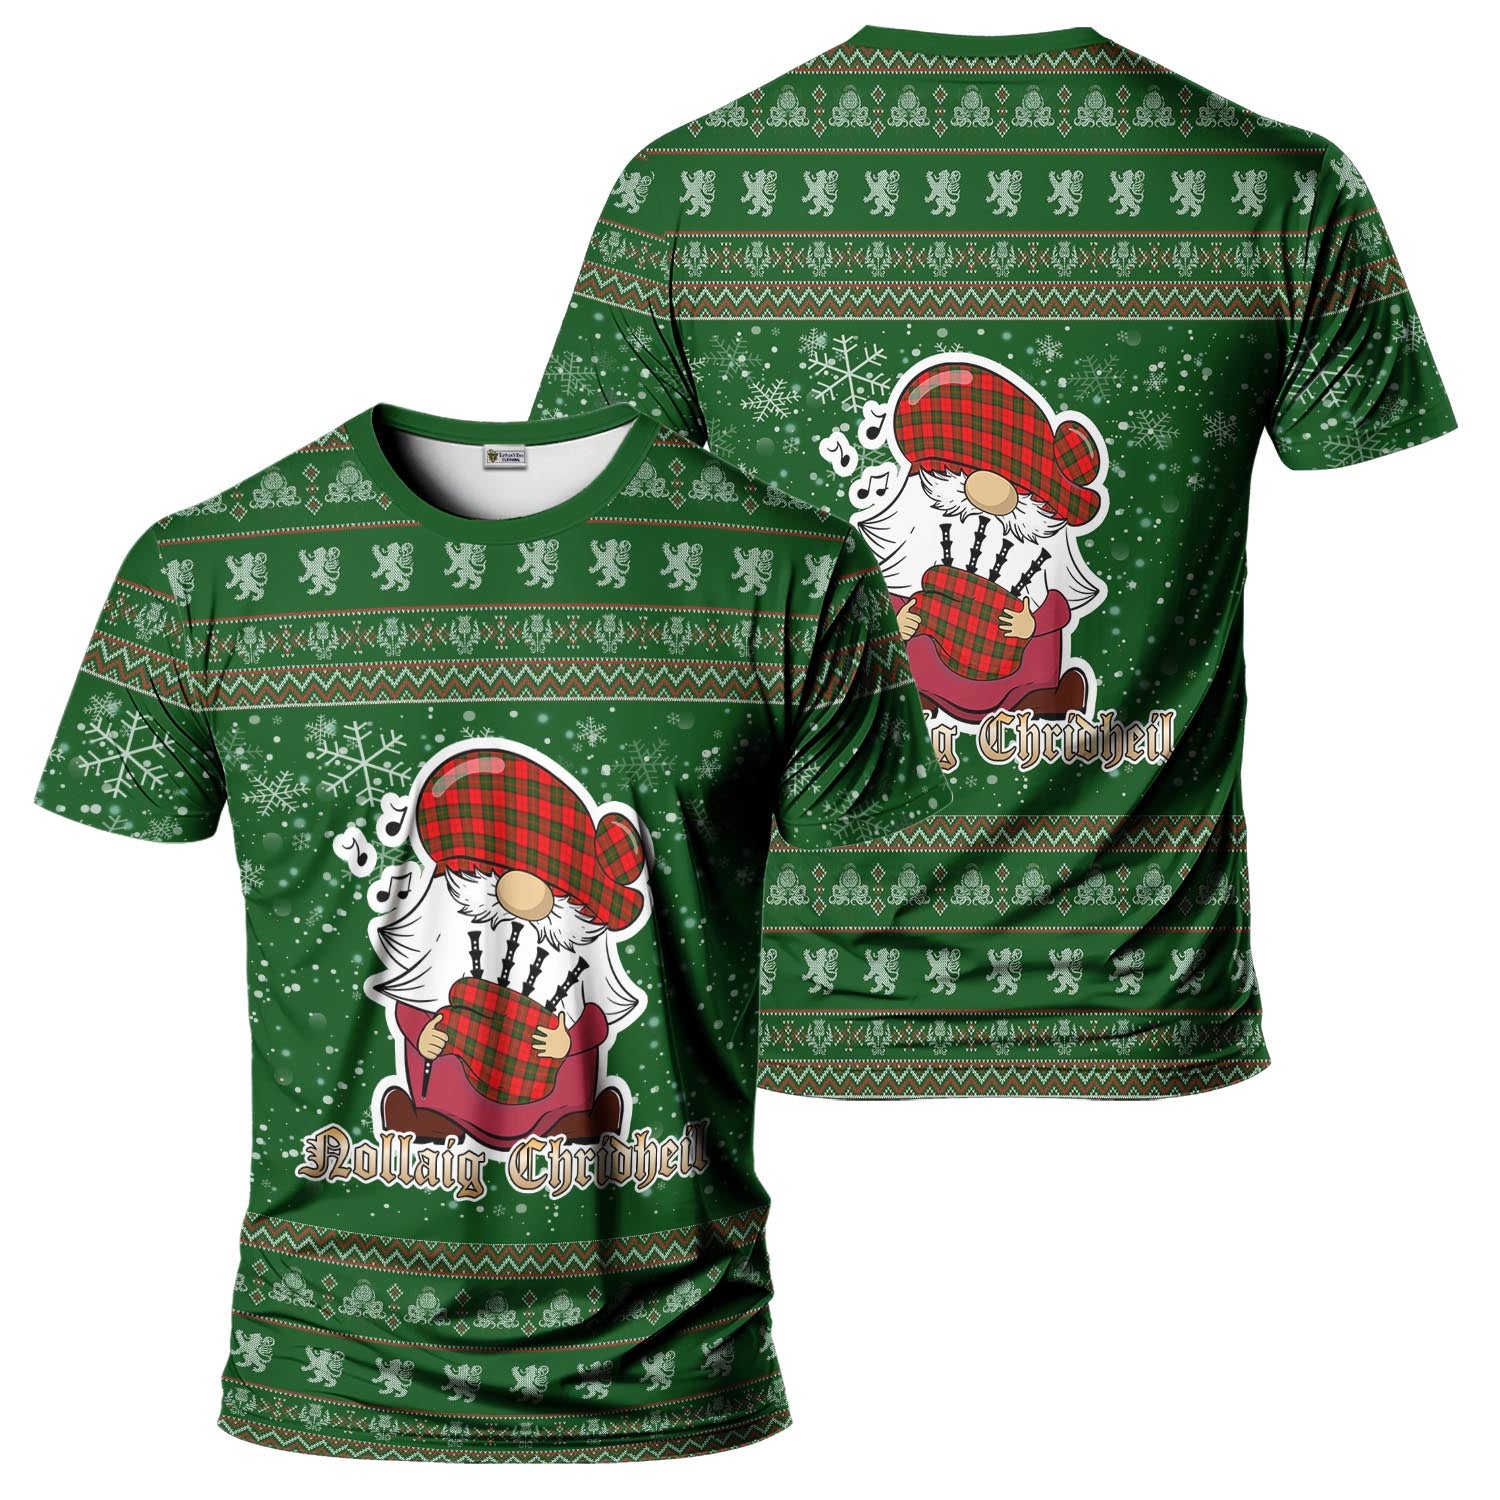 Dunbar Modern Clan Christmas Family T-Shirt with Funny Gnome Playing Bagpipes Men's Shirt Green - Tartanvibesclothing